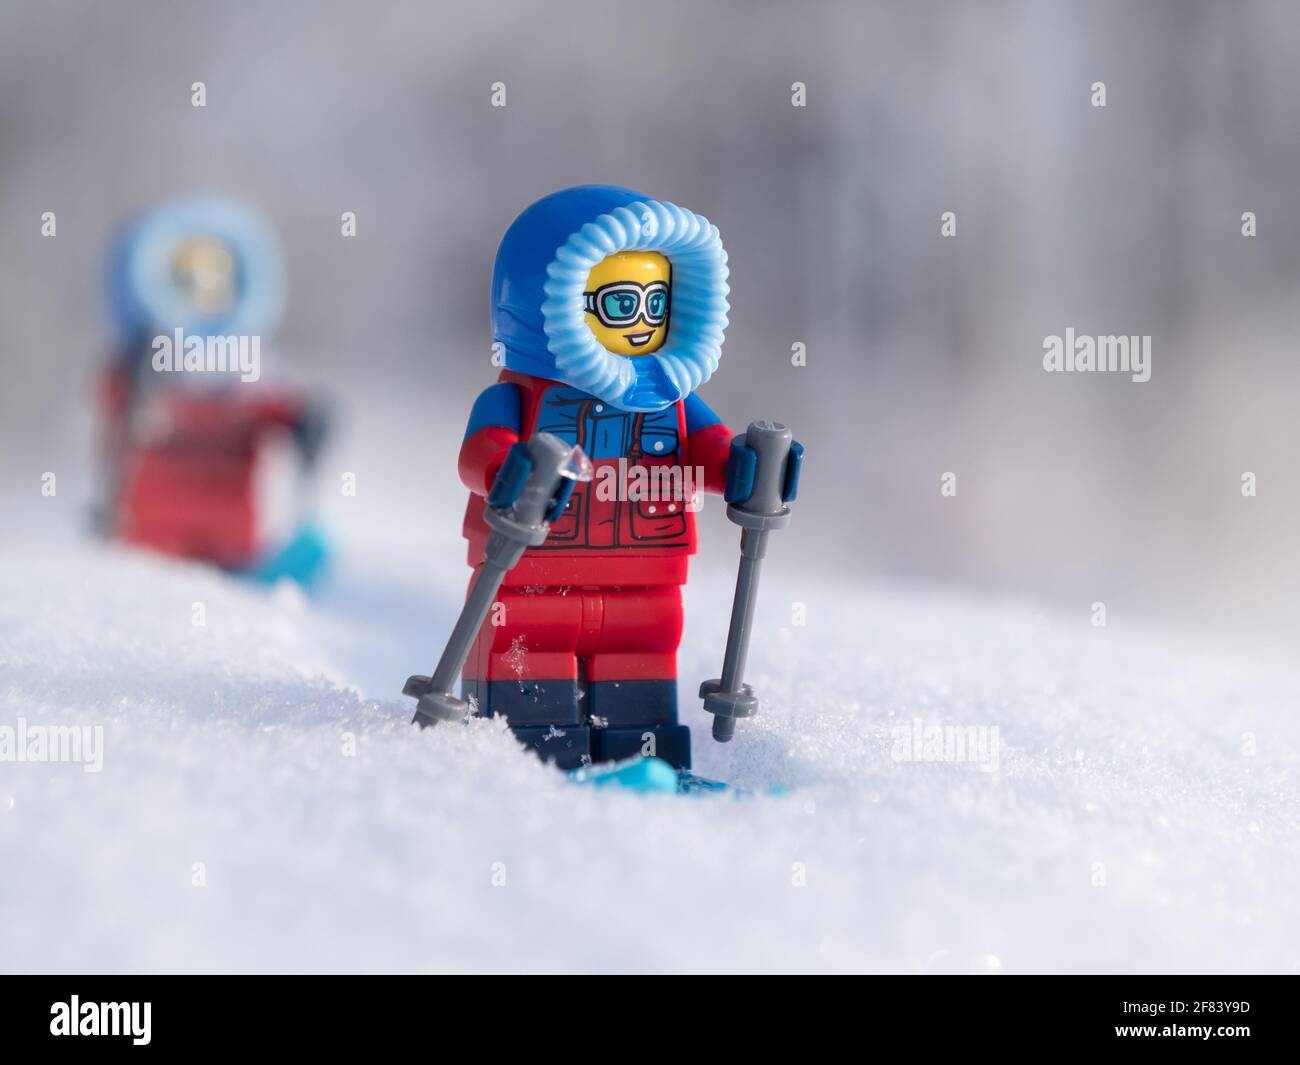 Lego minifigures skiing on deep snow blanket Stock Photo - Alamy